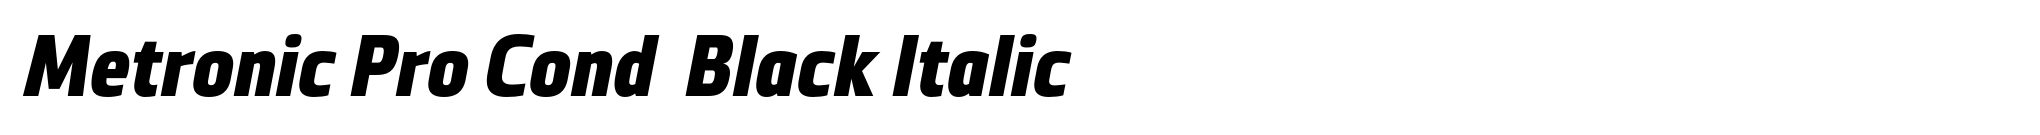 Metronic Pro Cond  Black Italic image